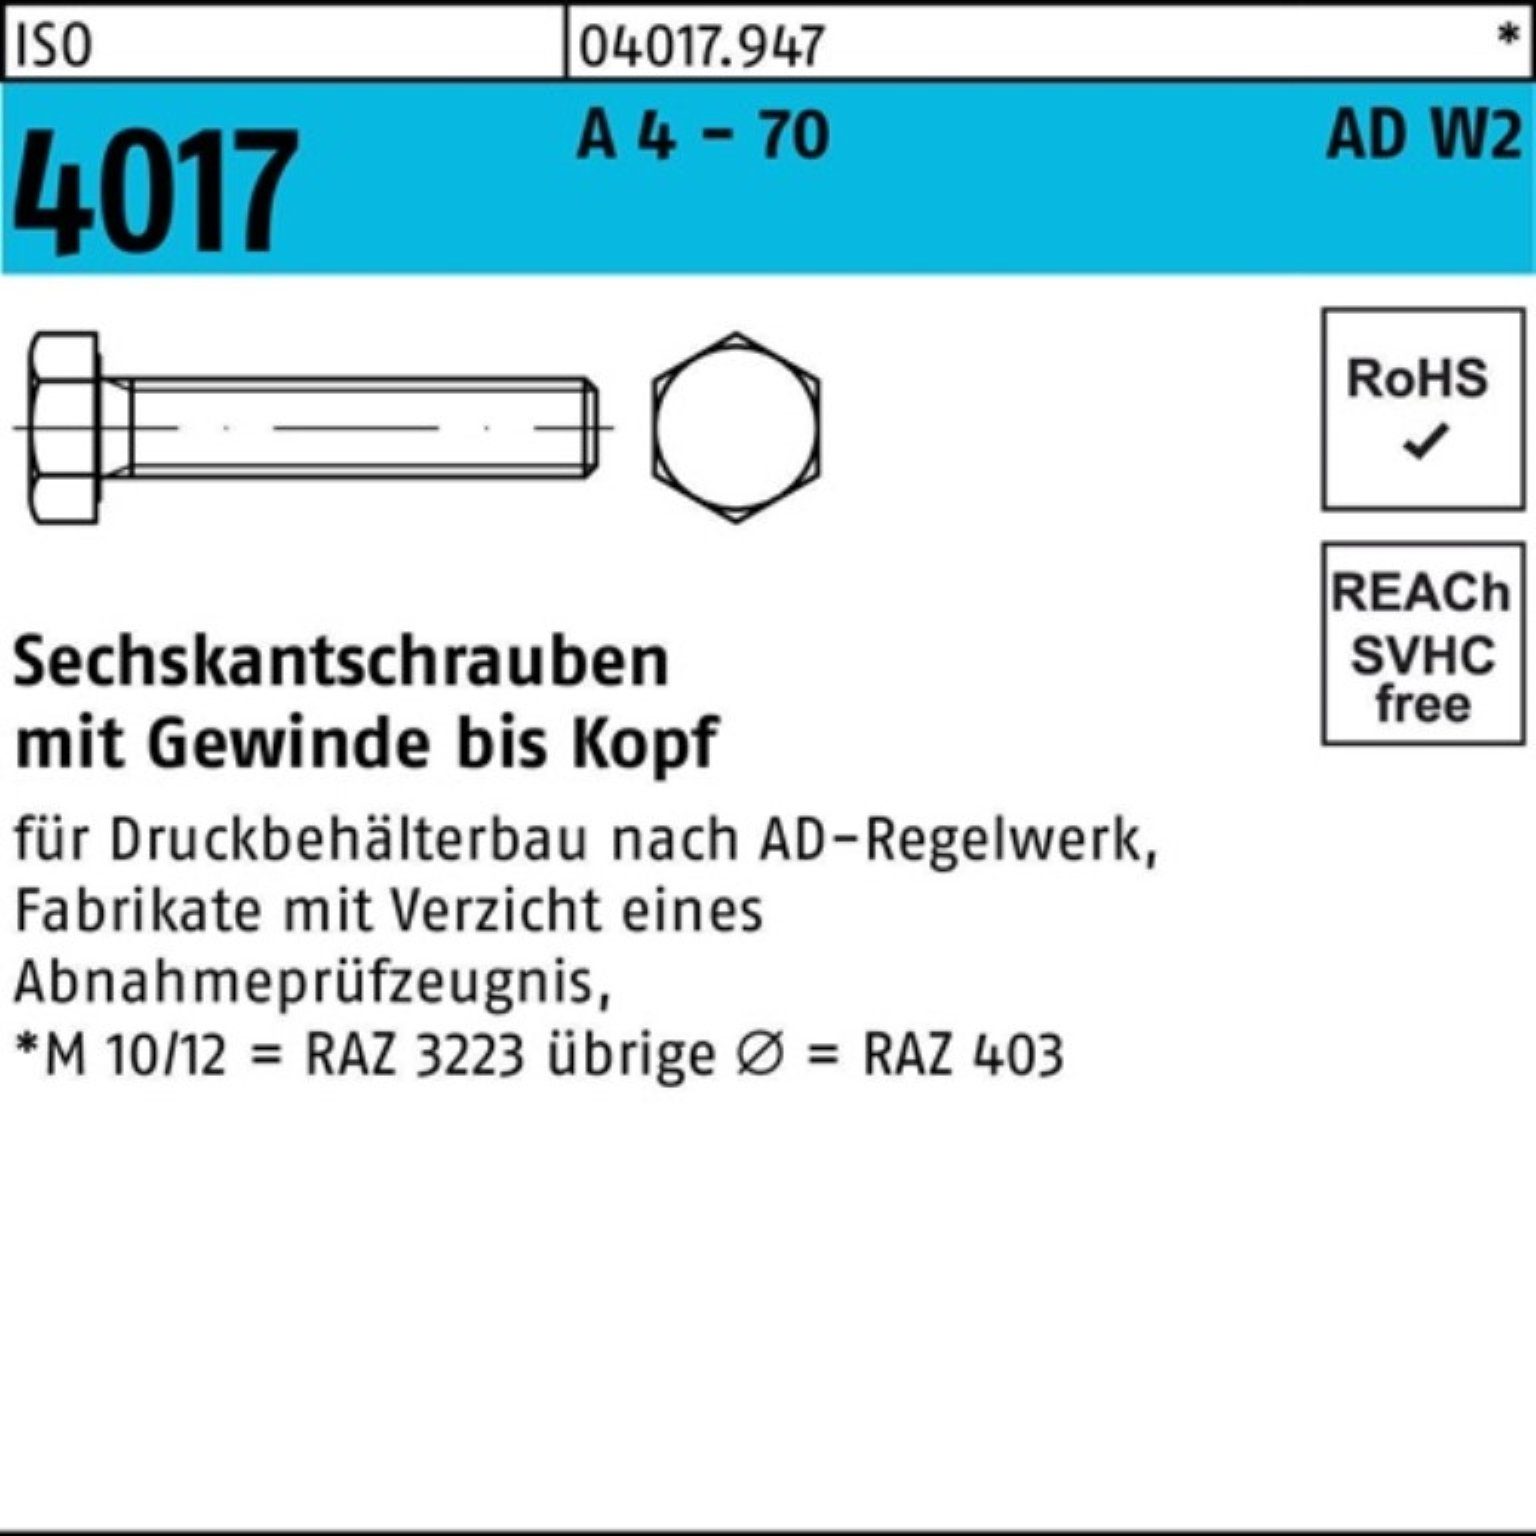 Bufab Sechskantschraube 200er Pack Sechskantschraube ISO 4017 VG M8x 16 A 4 - 70 AD-W2 200 St